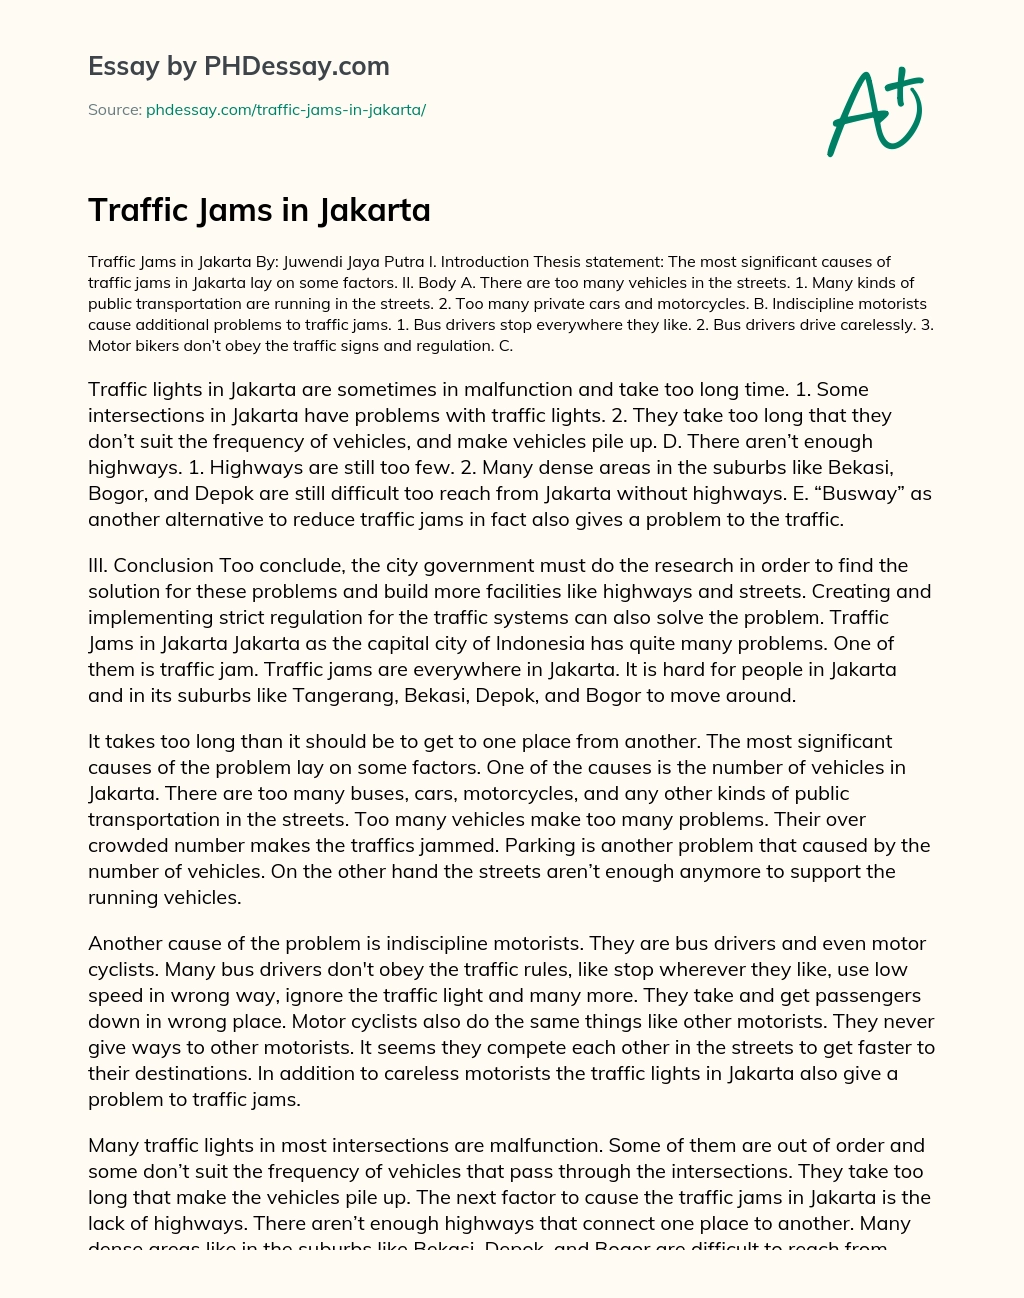 Traffic Jams in Jakarta essay